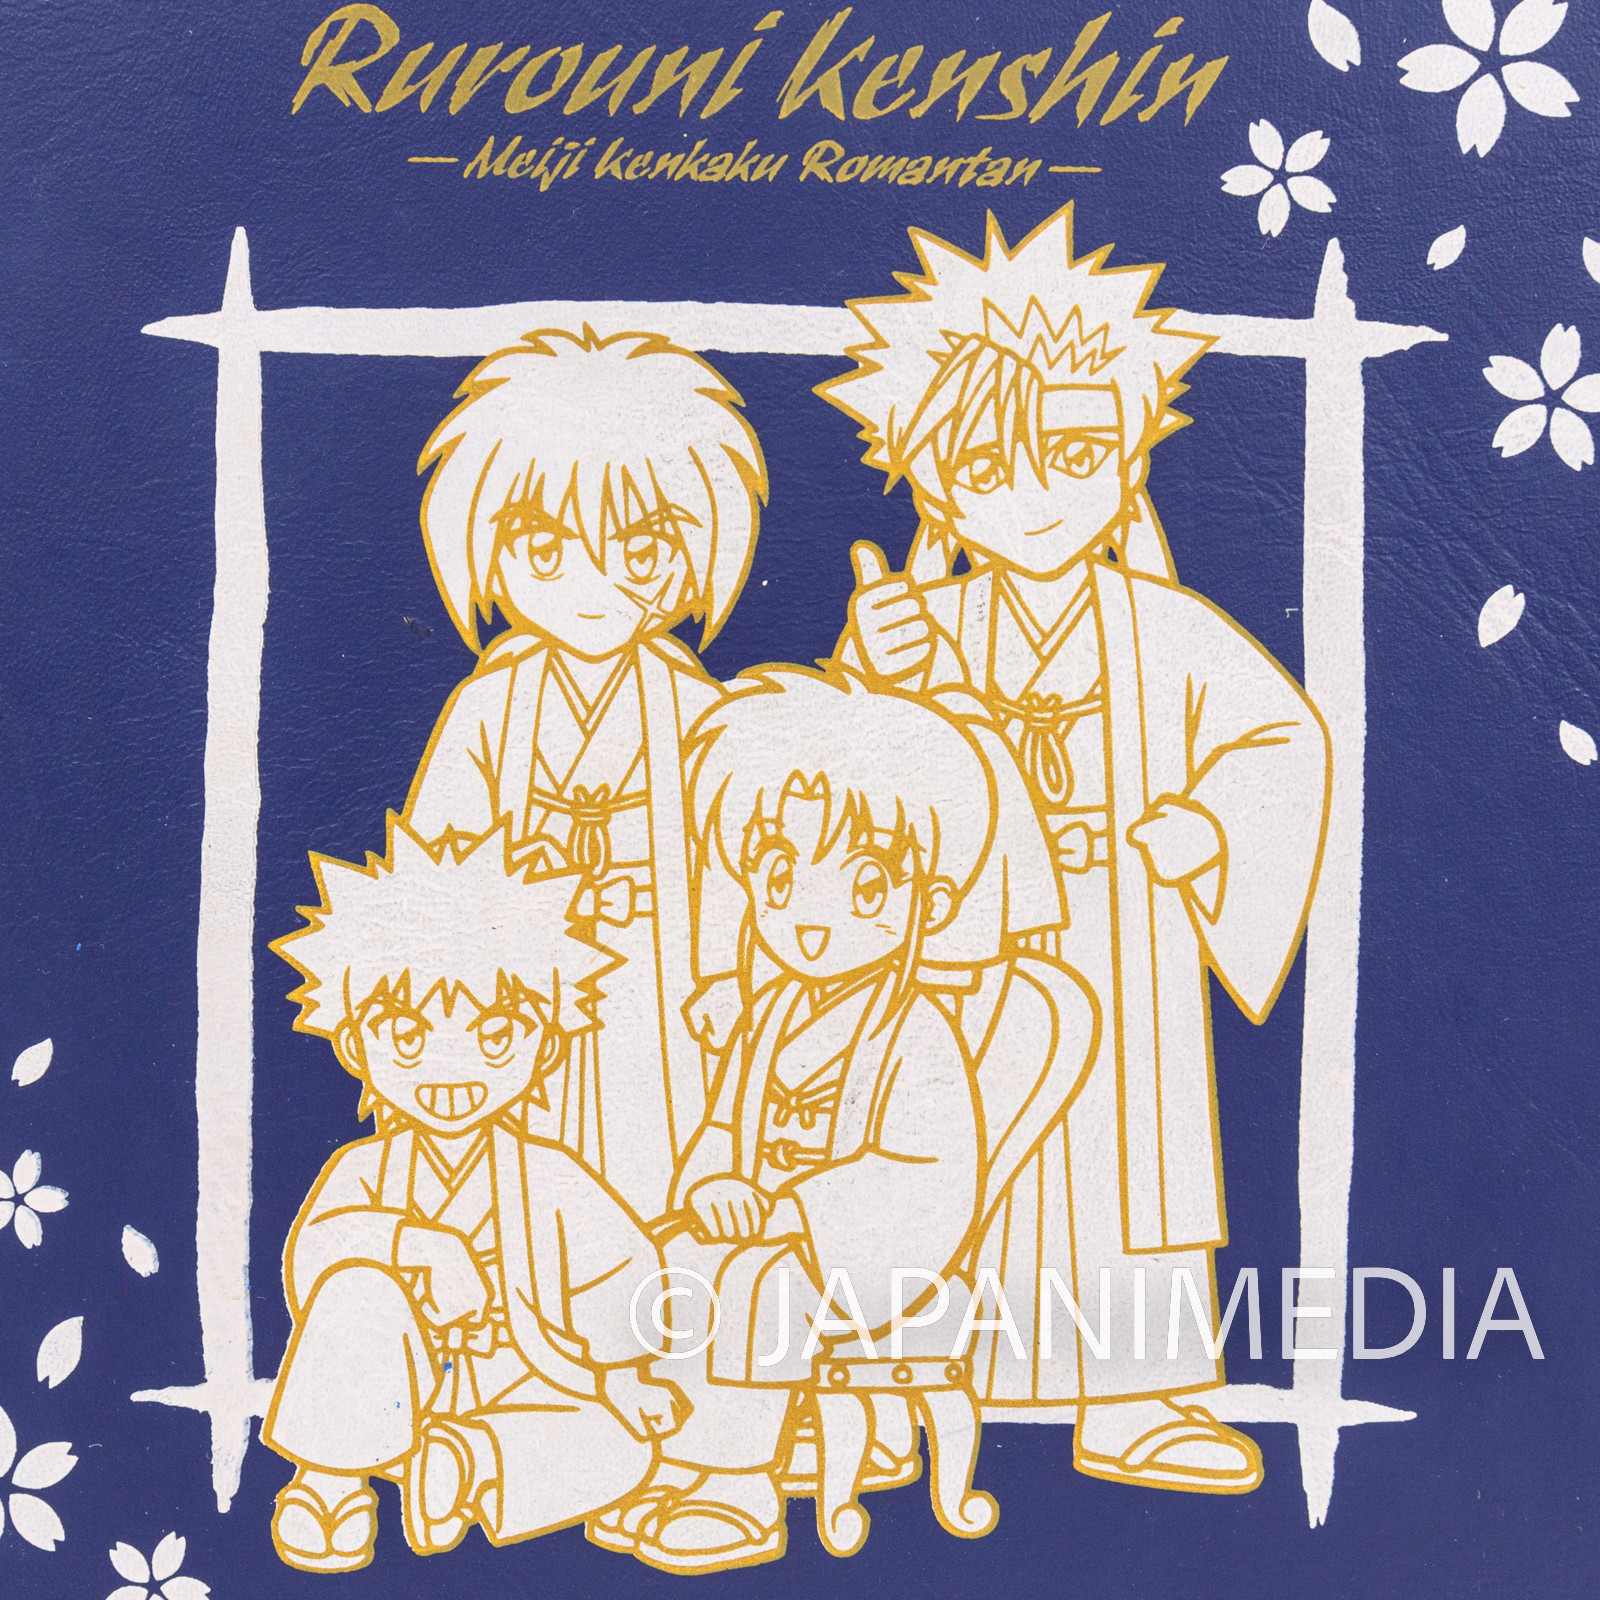 Rurouni Kenshin CD Disk Case Holder Movic JAPAN ANIME